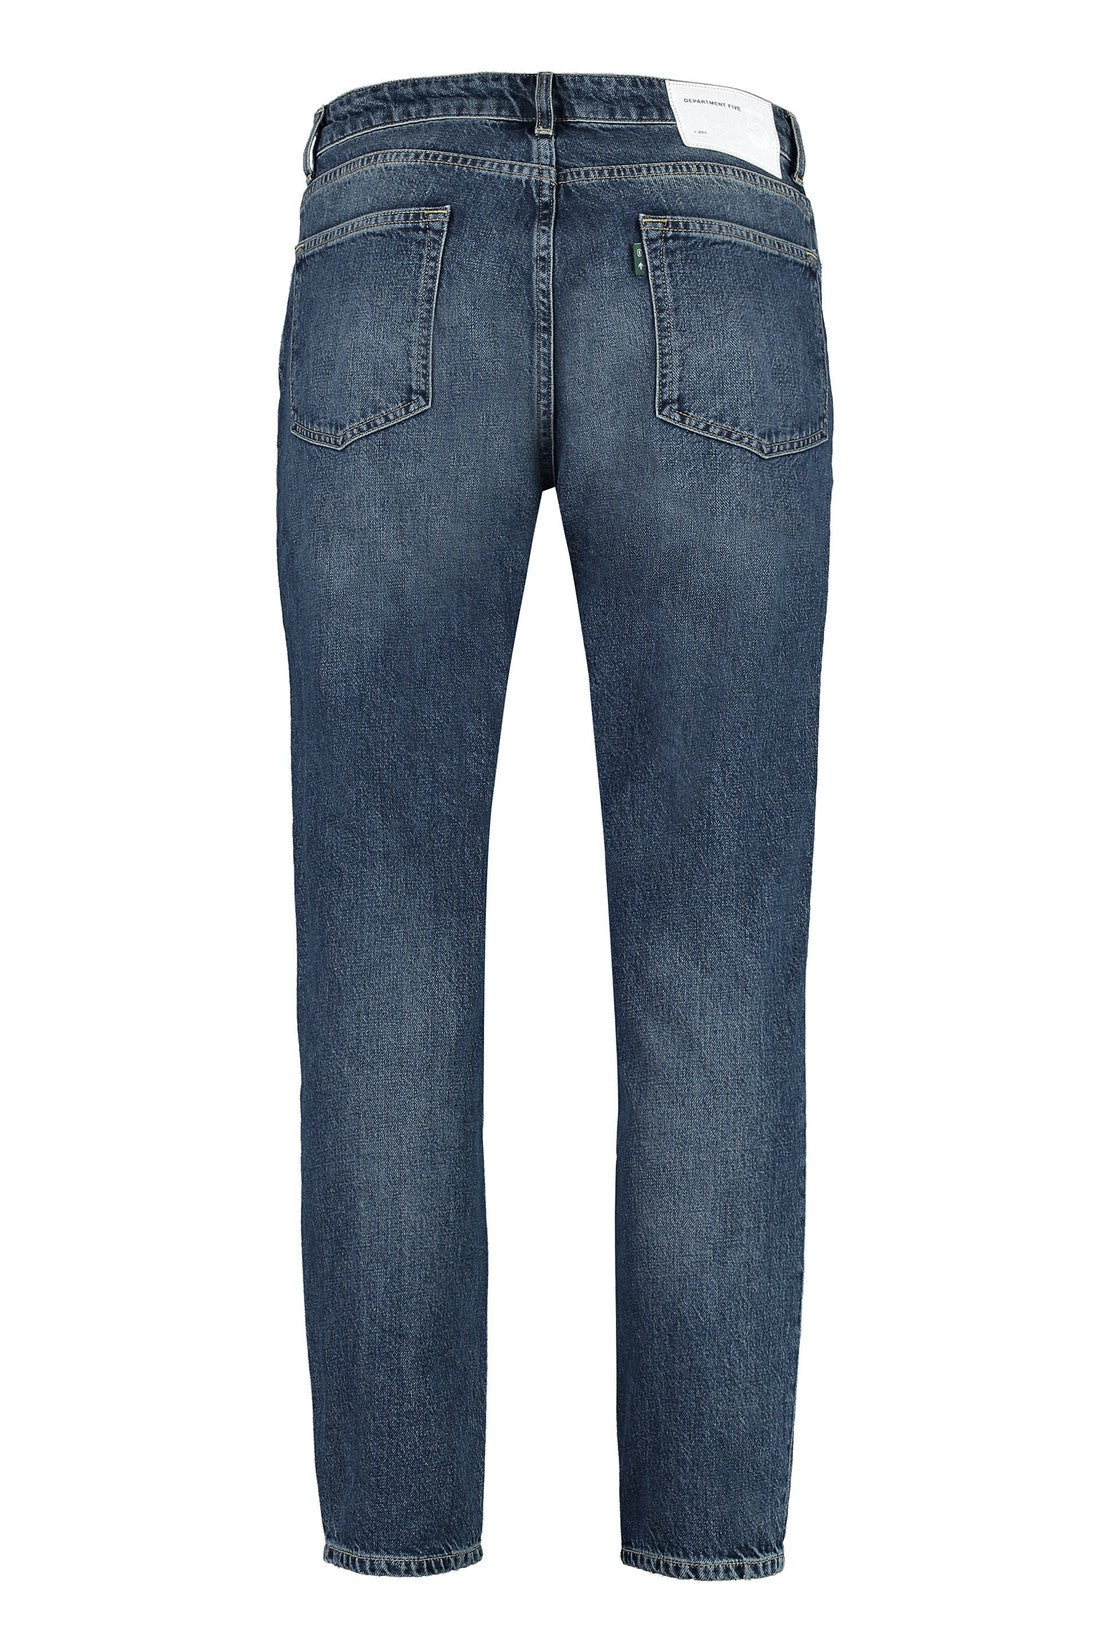 Department 5-OUTLET-SALE-Drake slim fit jeans-ARCHIVIST